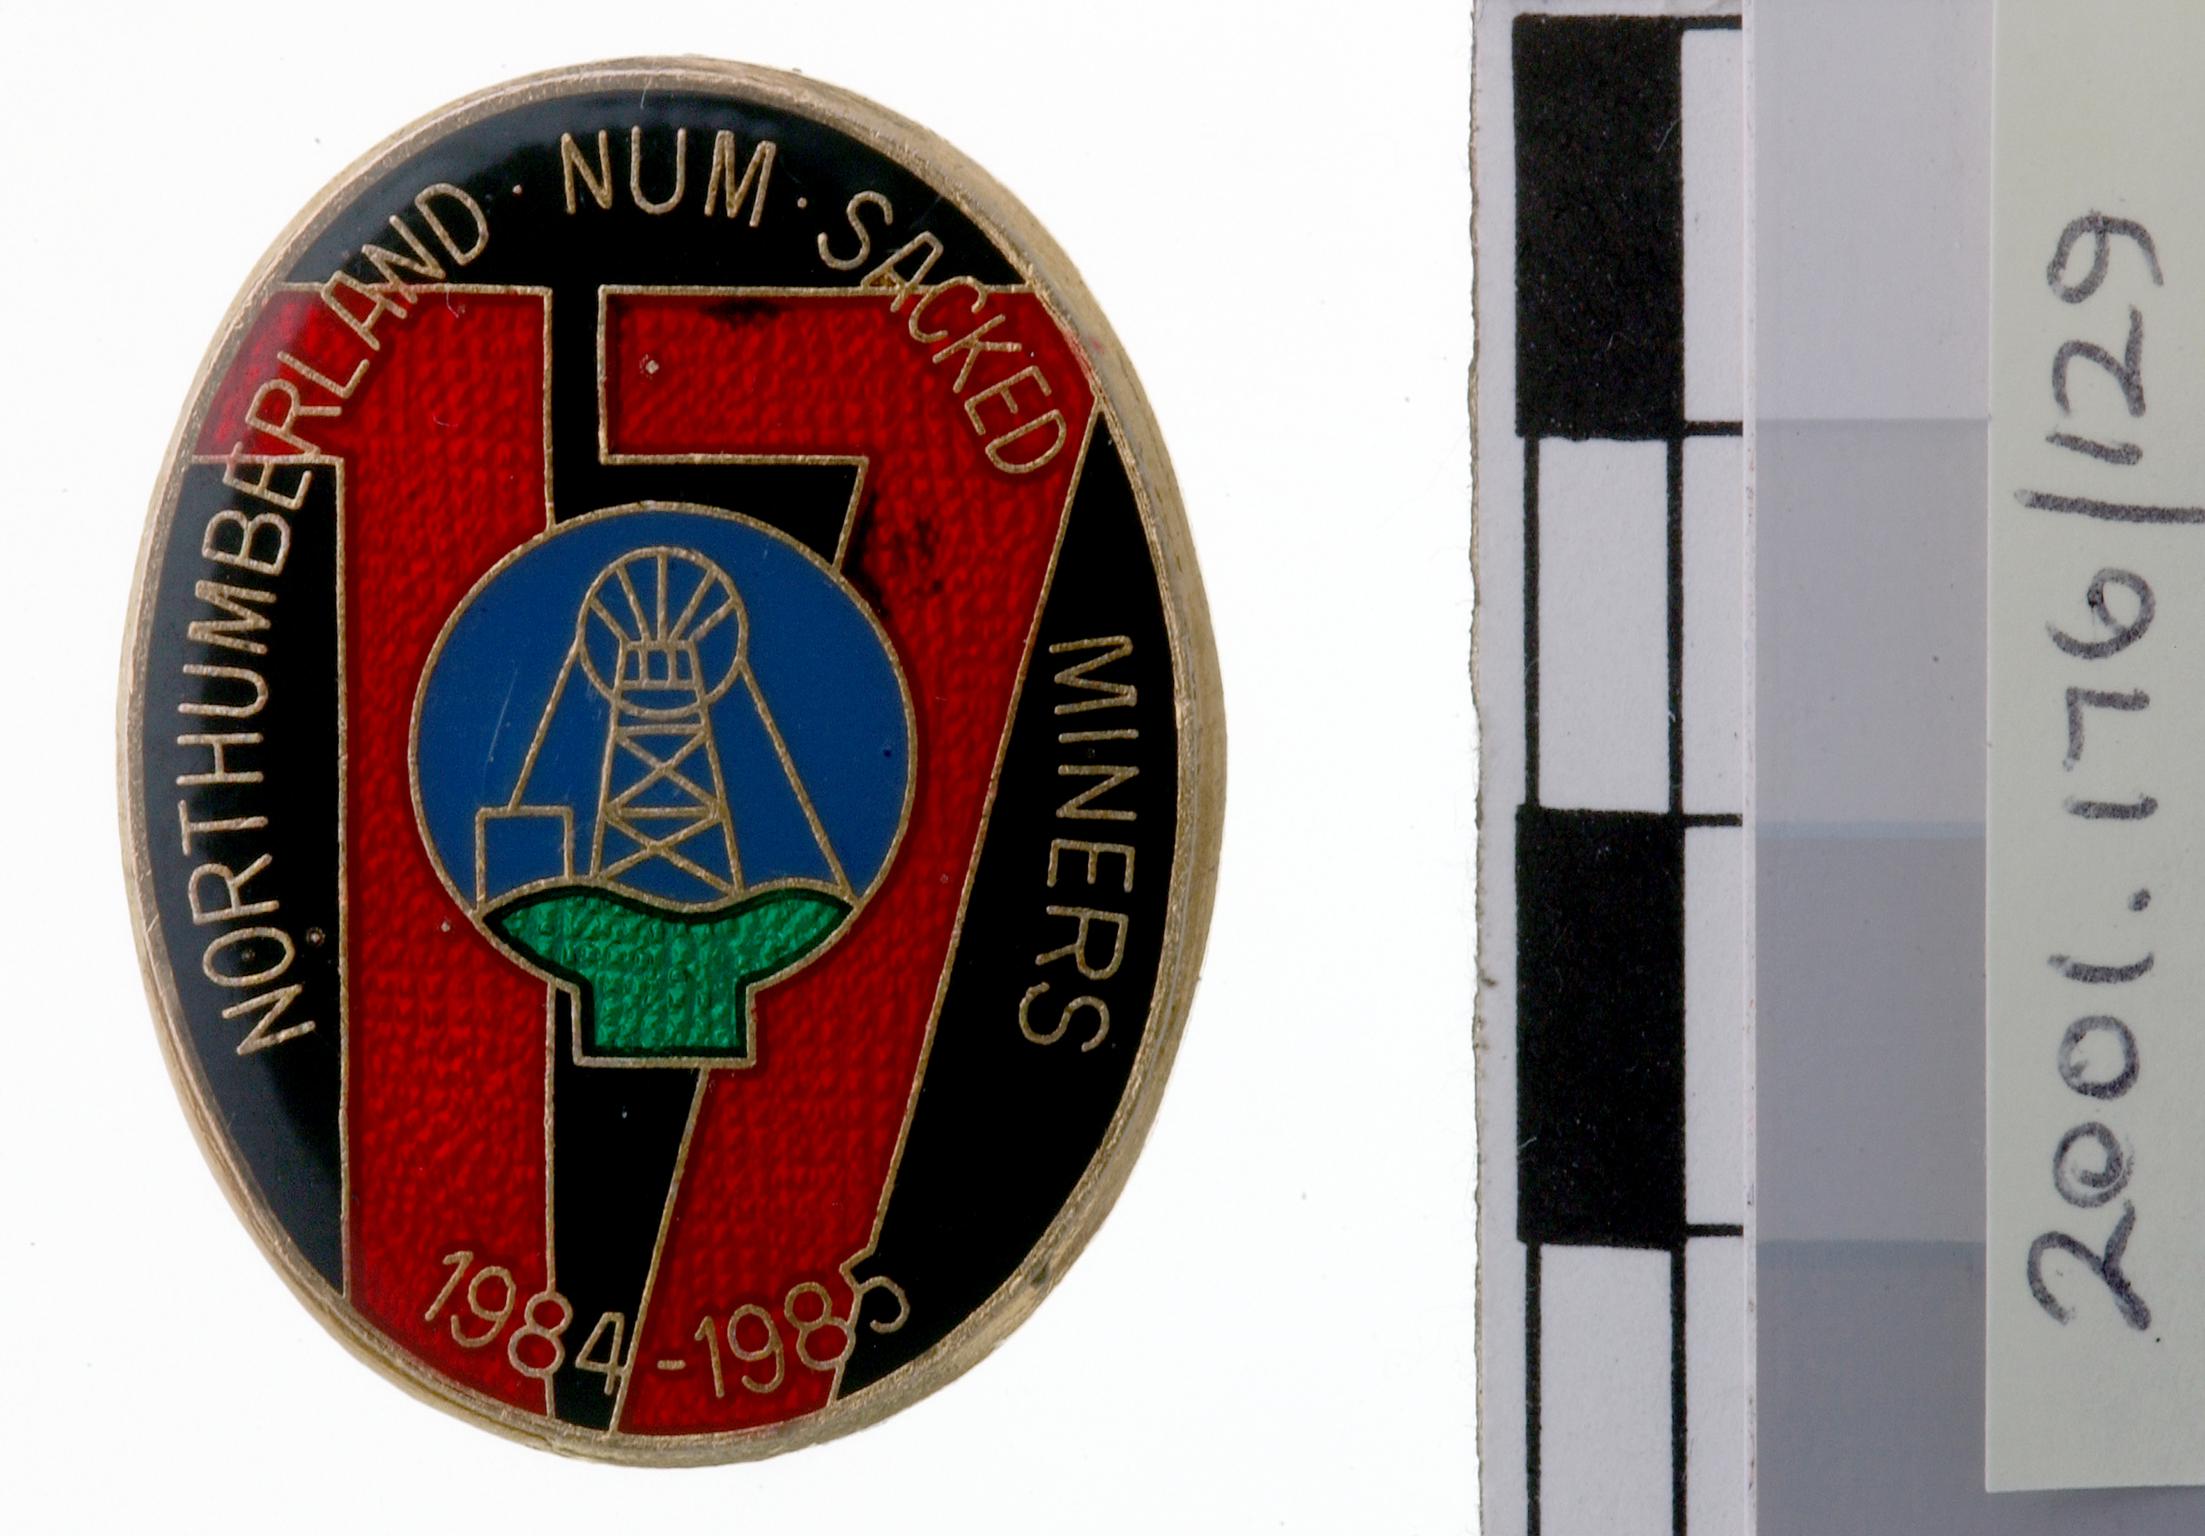 N.U.M. Northumberland, badge